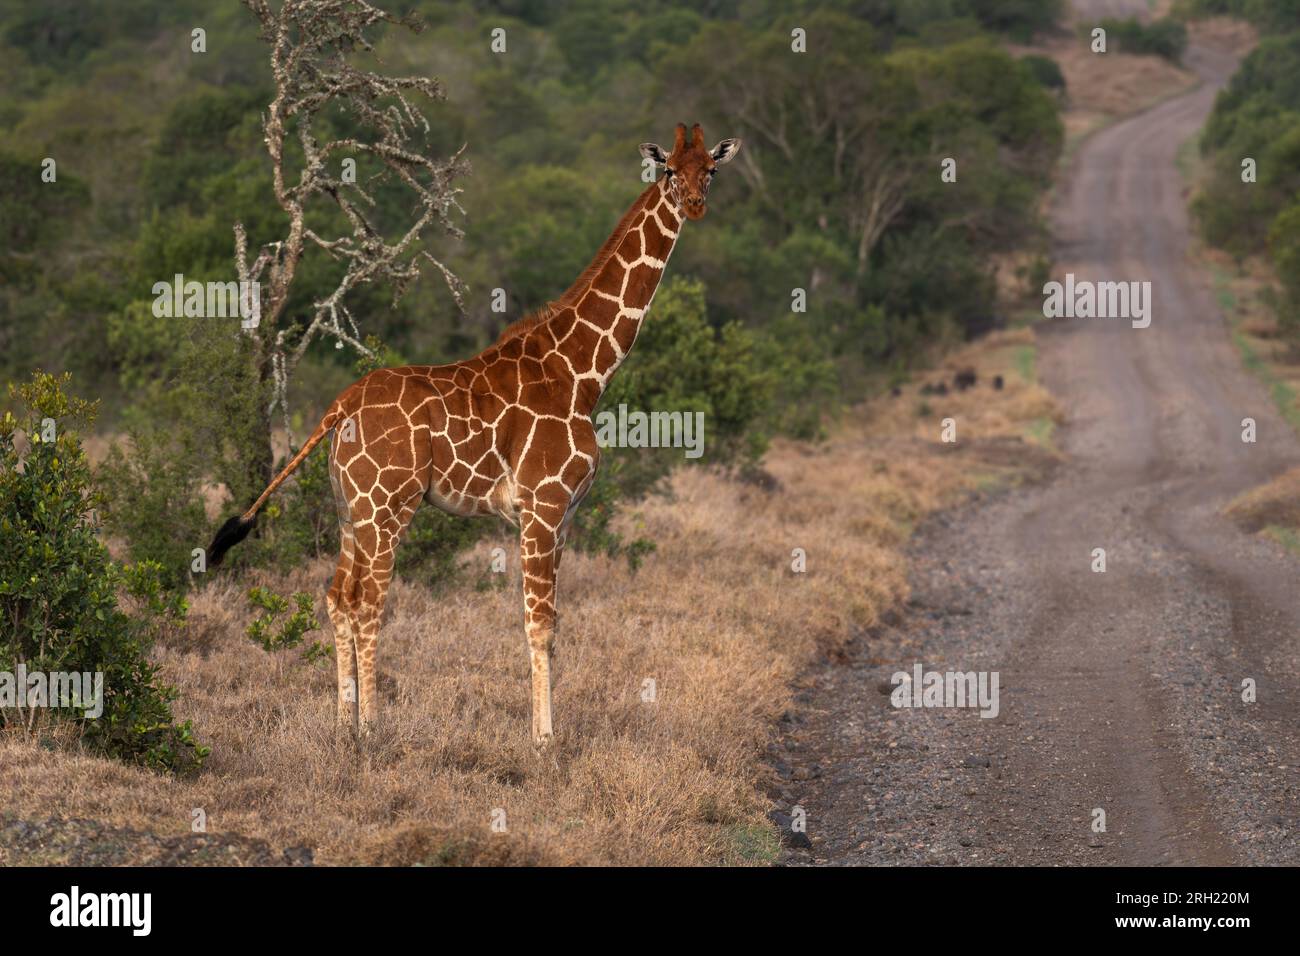 Reticulated giraffa, Giraffa camelopardalis reticulata, Ol Pejeta Conservancy Area, Kenya, Africa Stock Photo